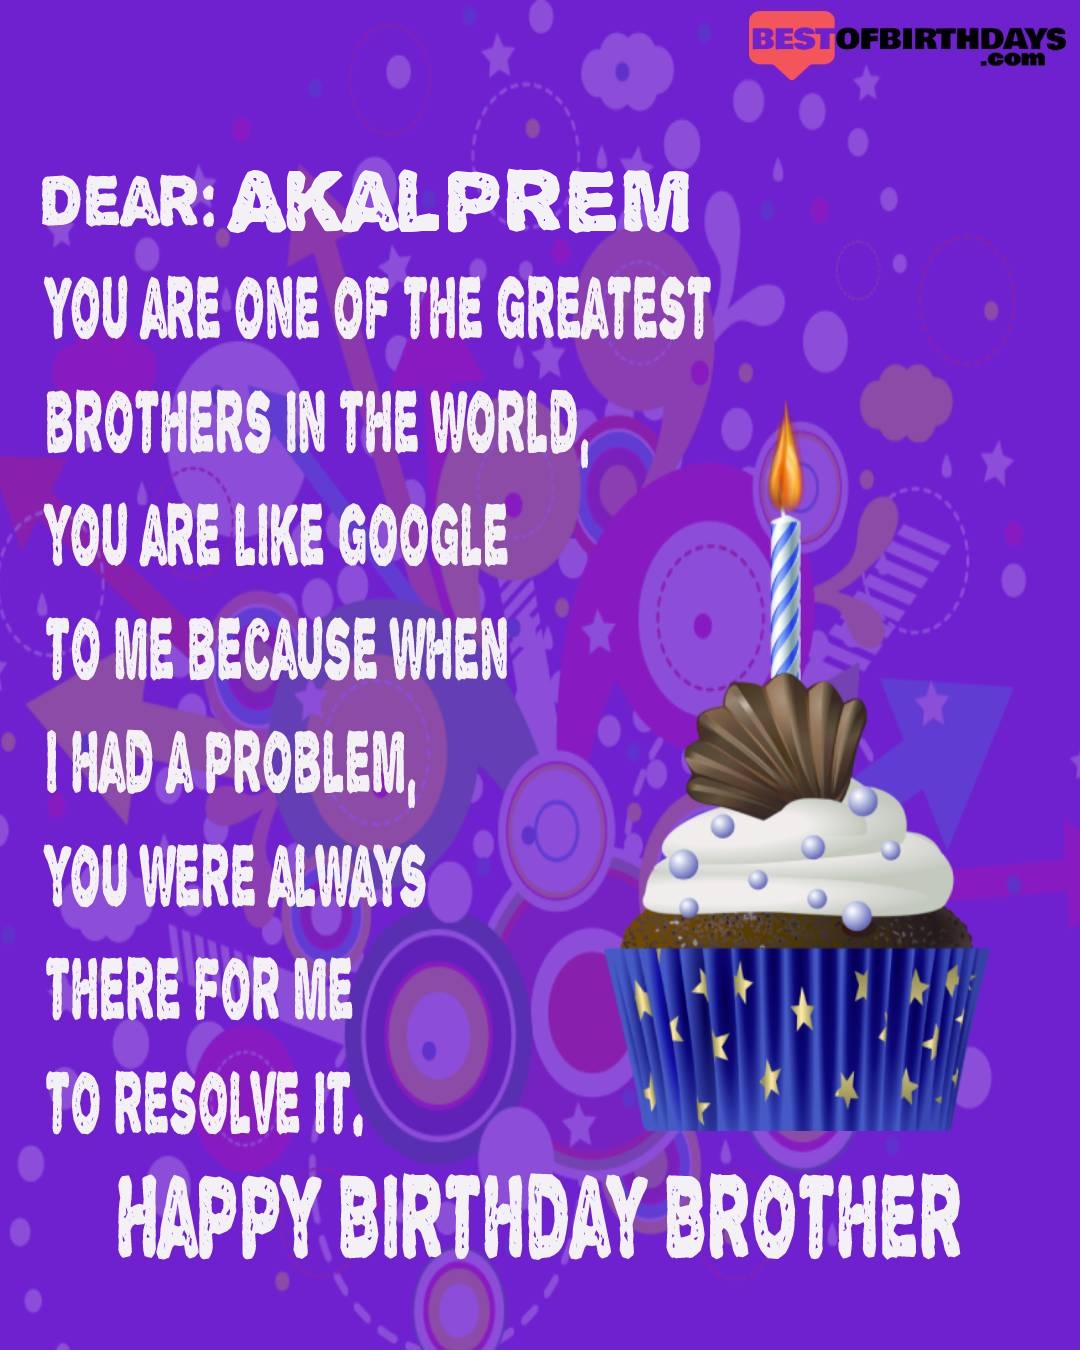 Happy birthday akalprem bhai brother bro